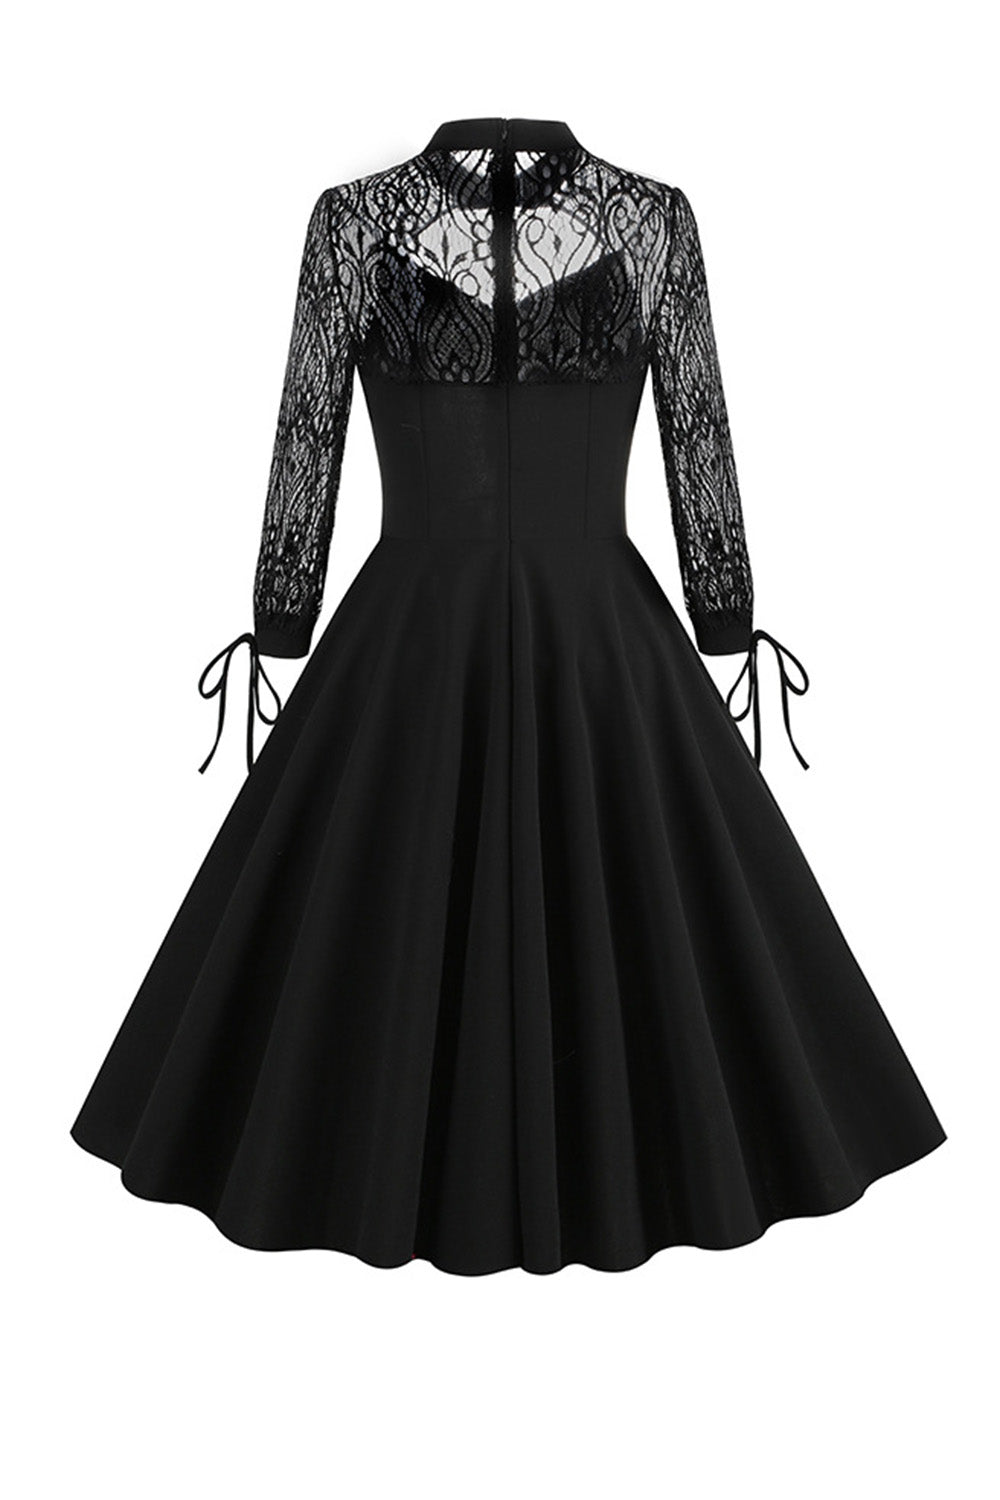 Black Long Sleeves Lace Vintage Dress